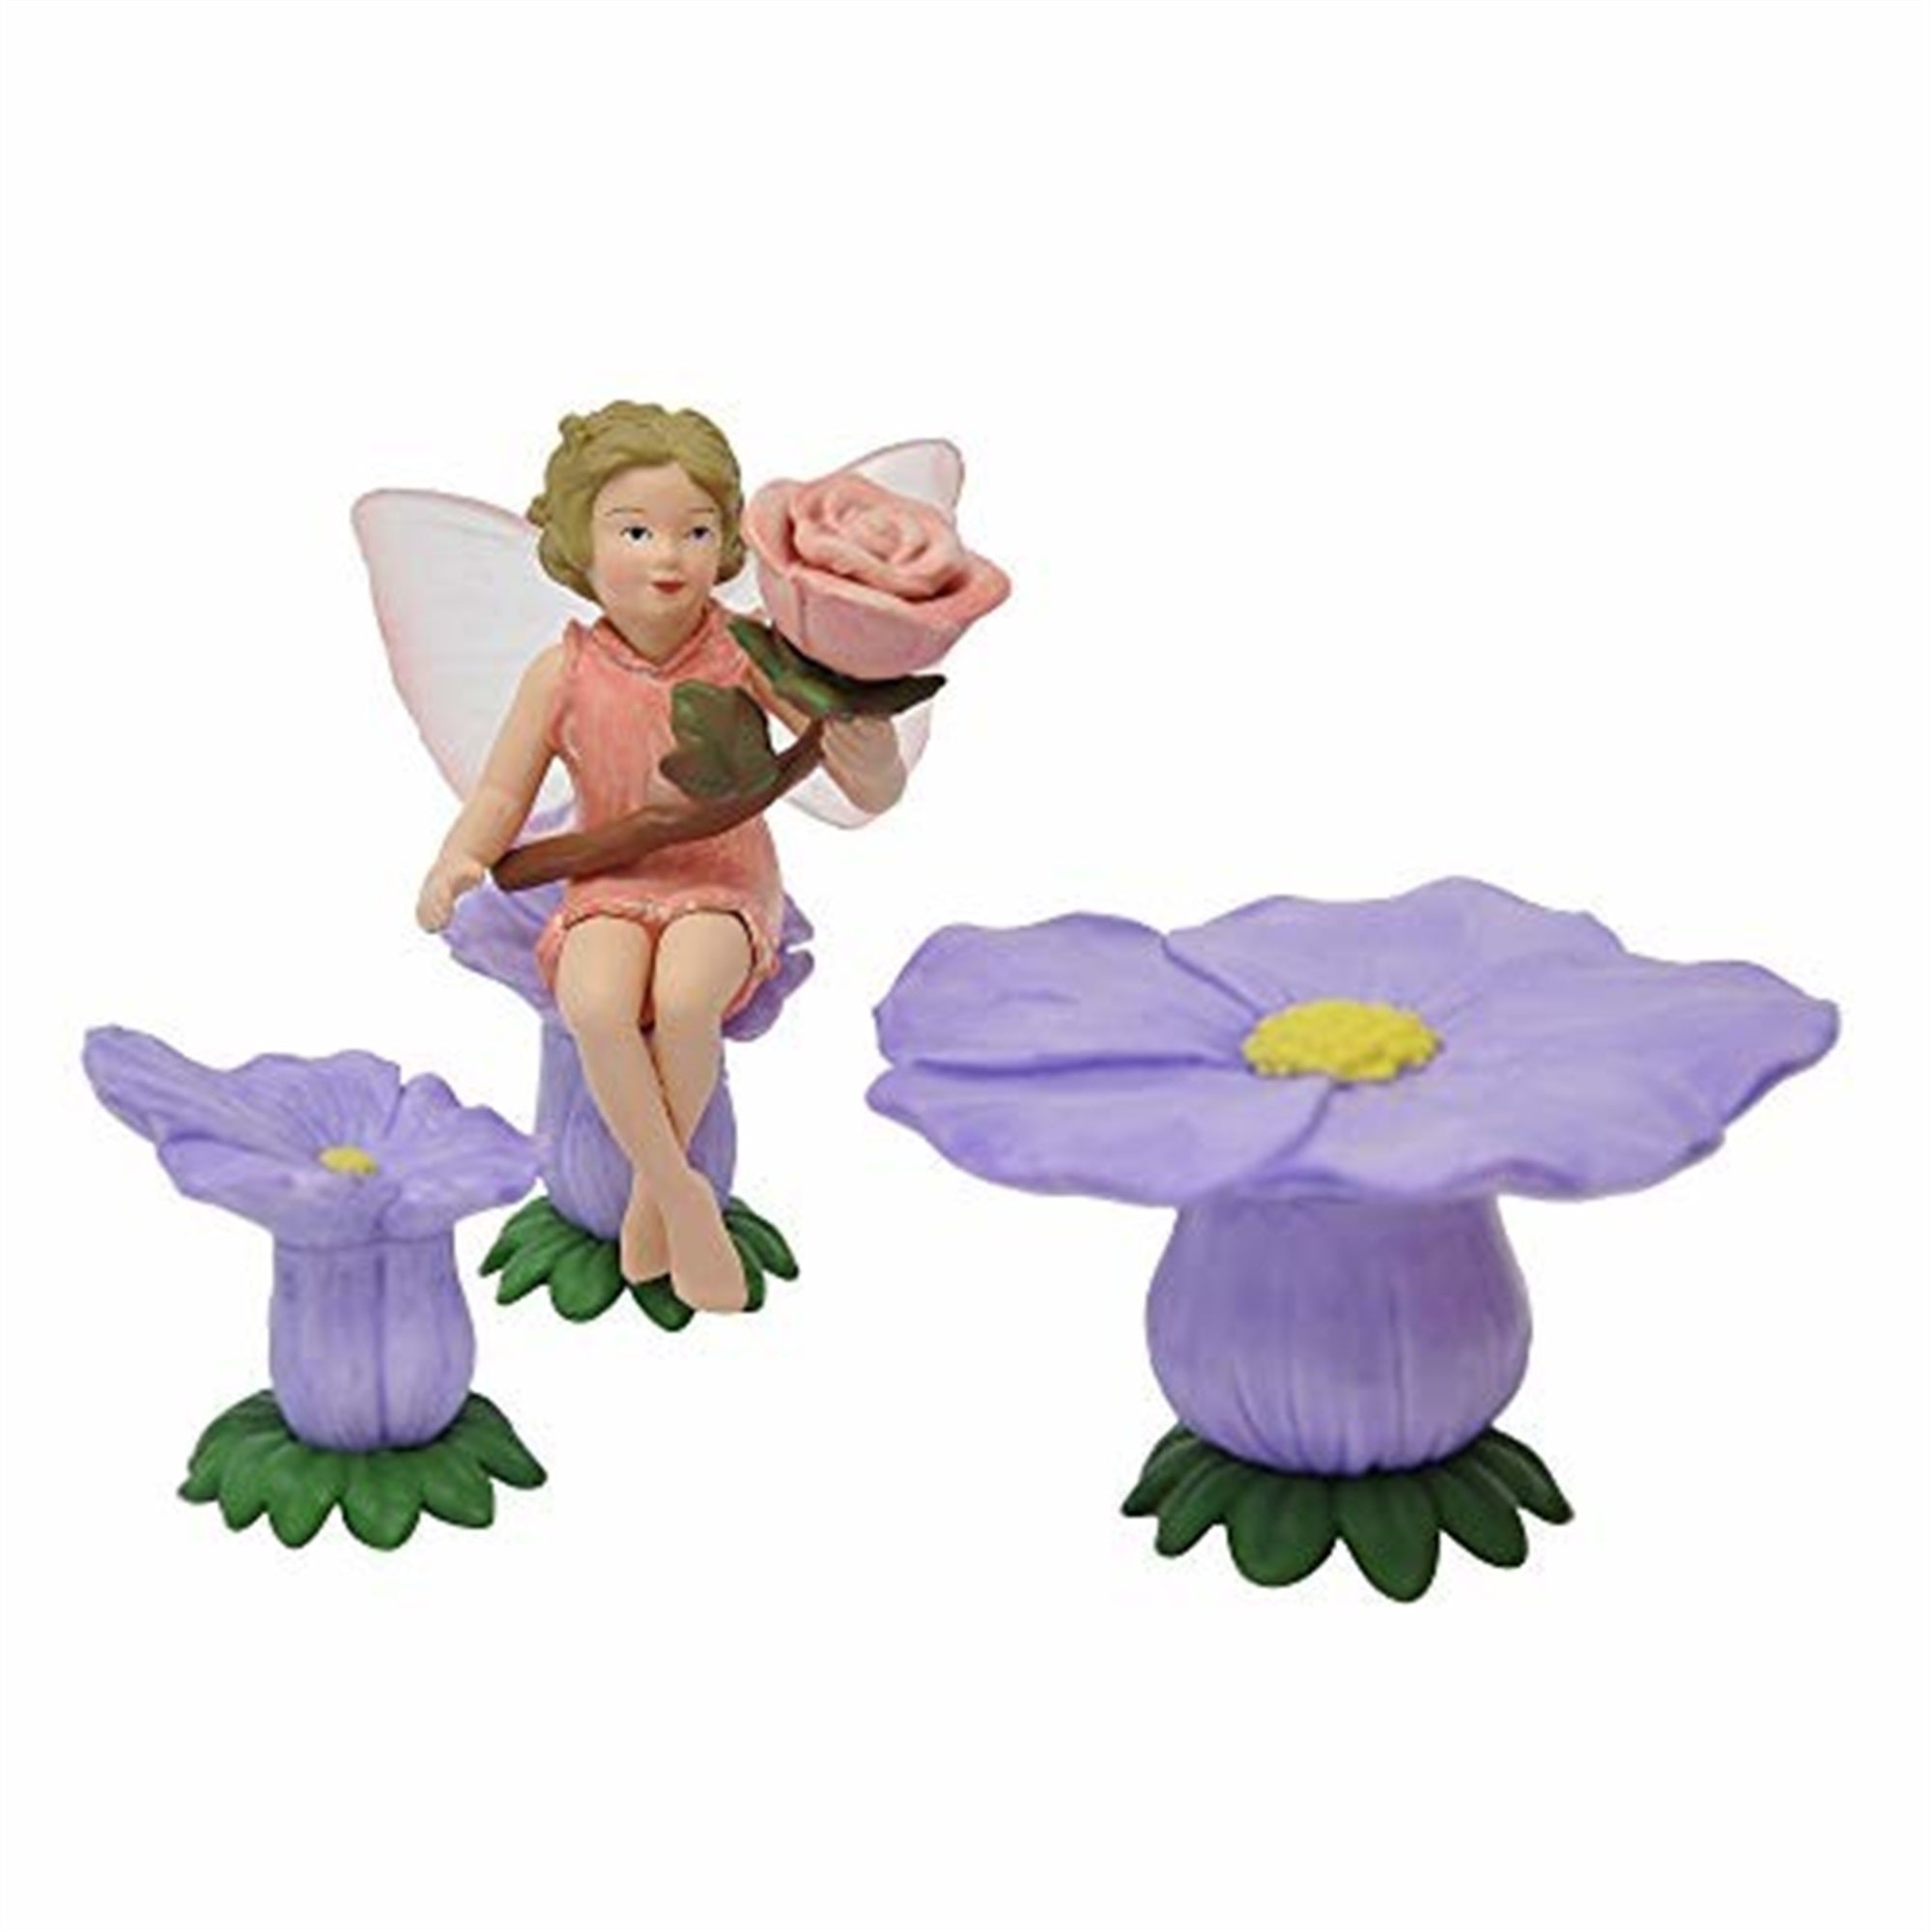 Flower Fairies Mixed Case Gift Pack Fairies For Garden, Bulk (Pack of 8)